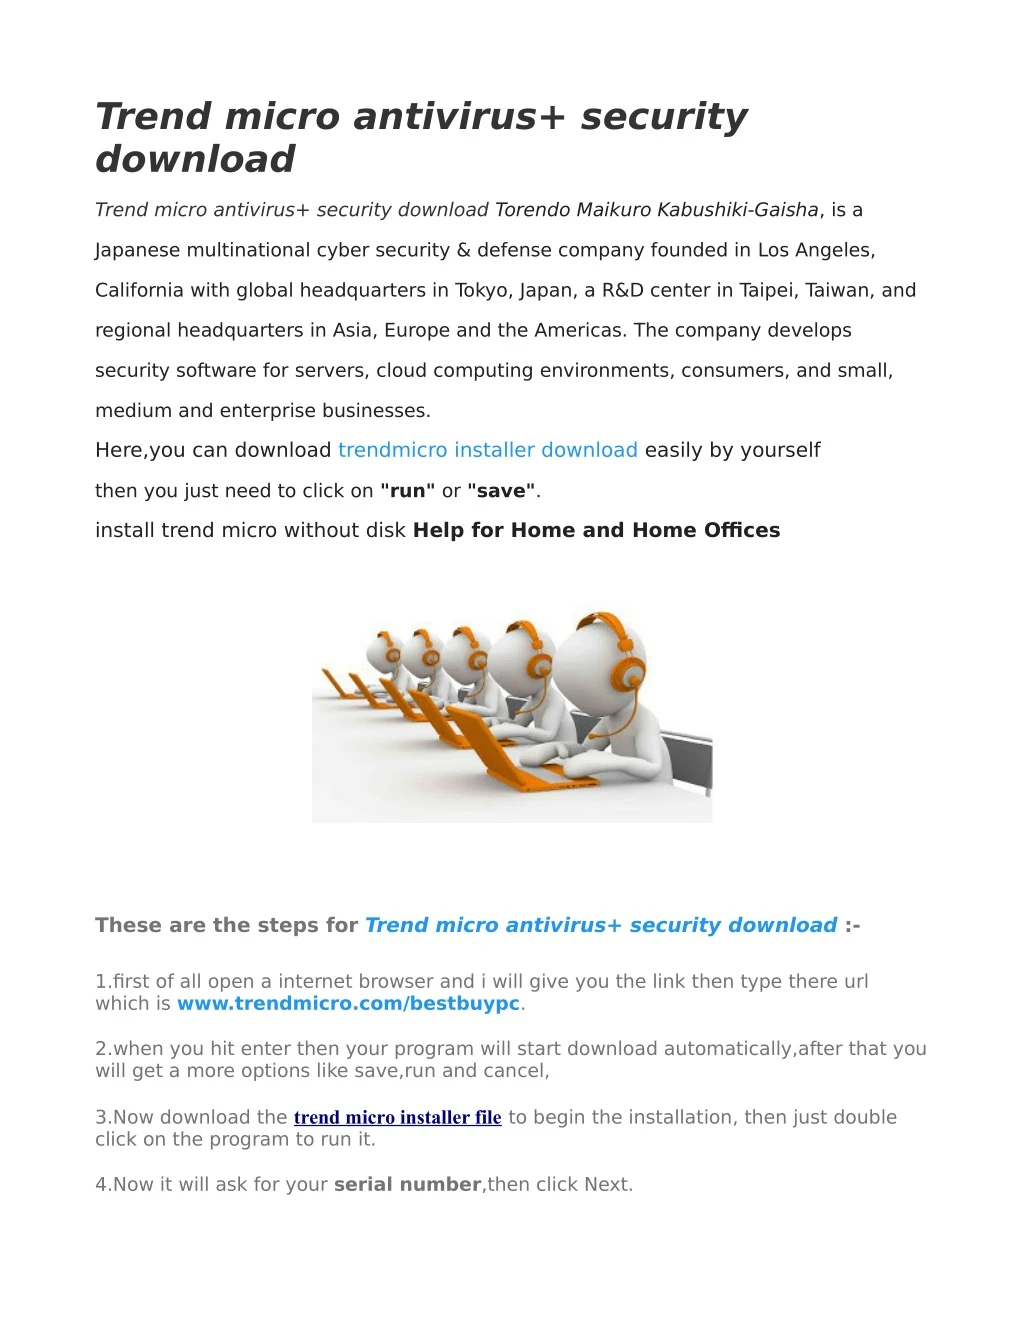 trend micro antivirus security download